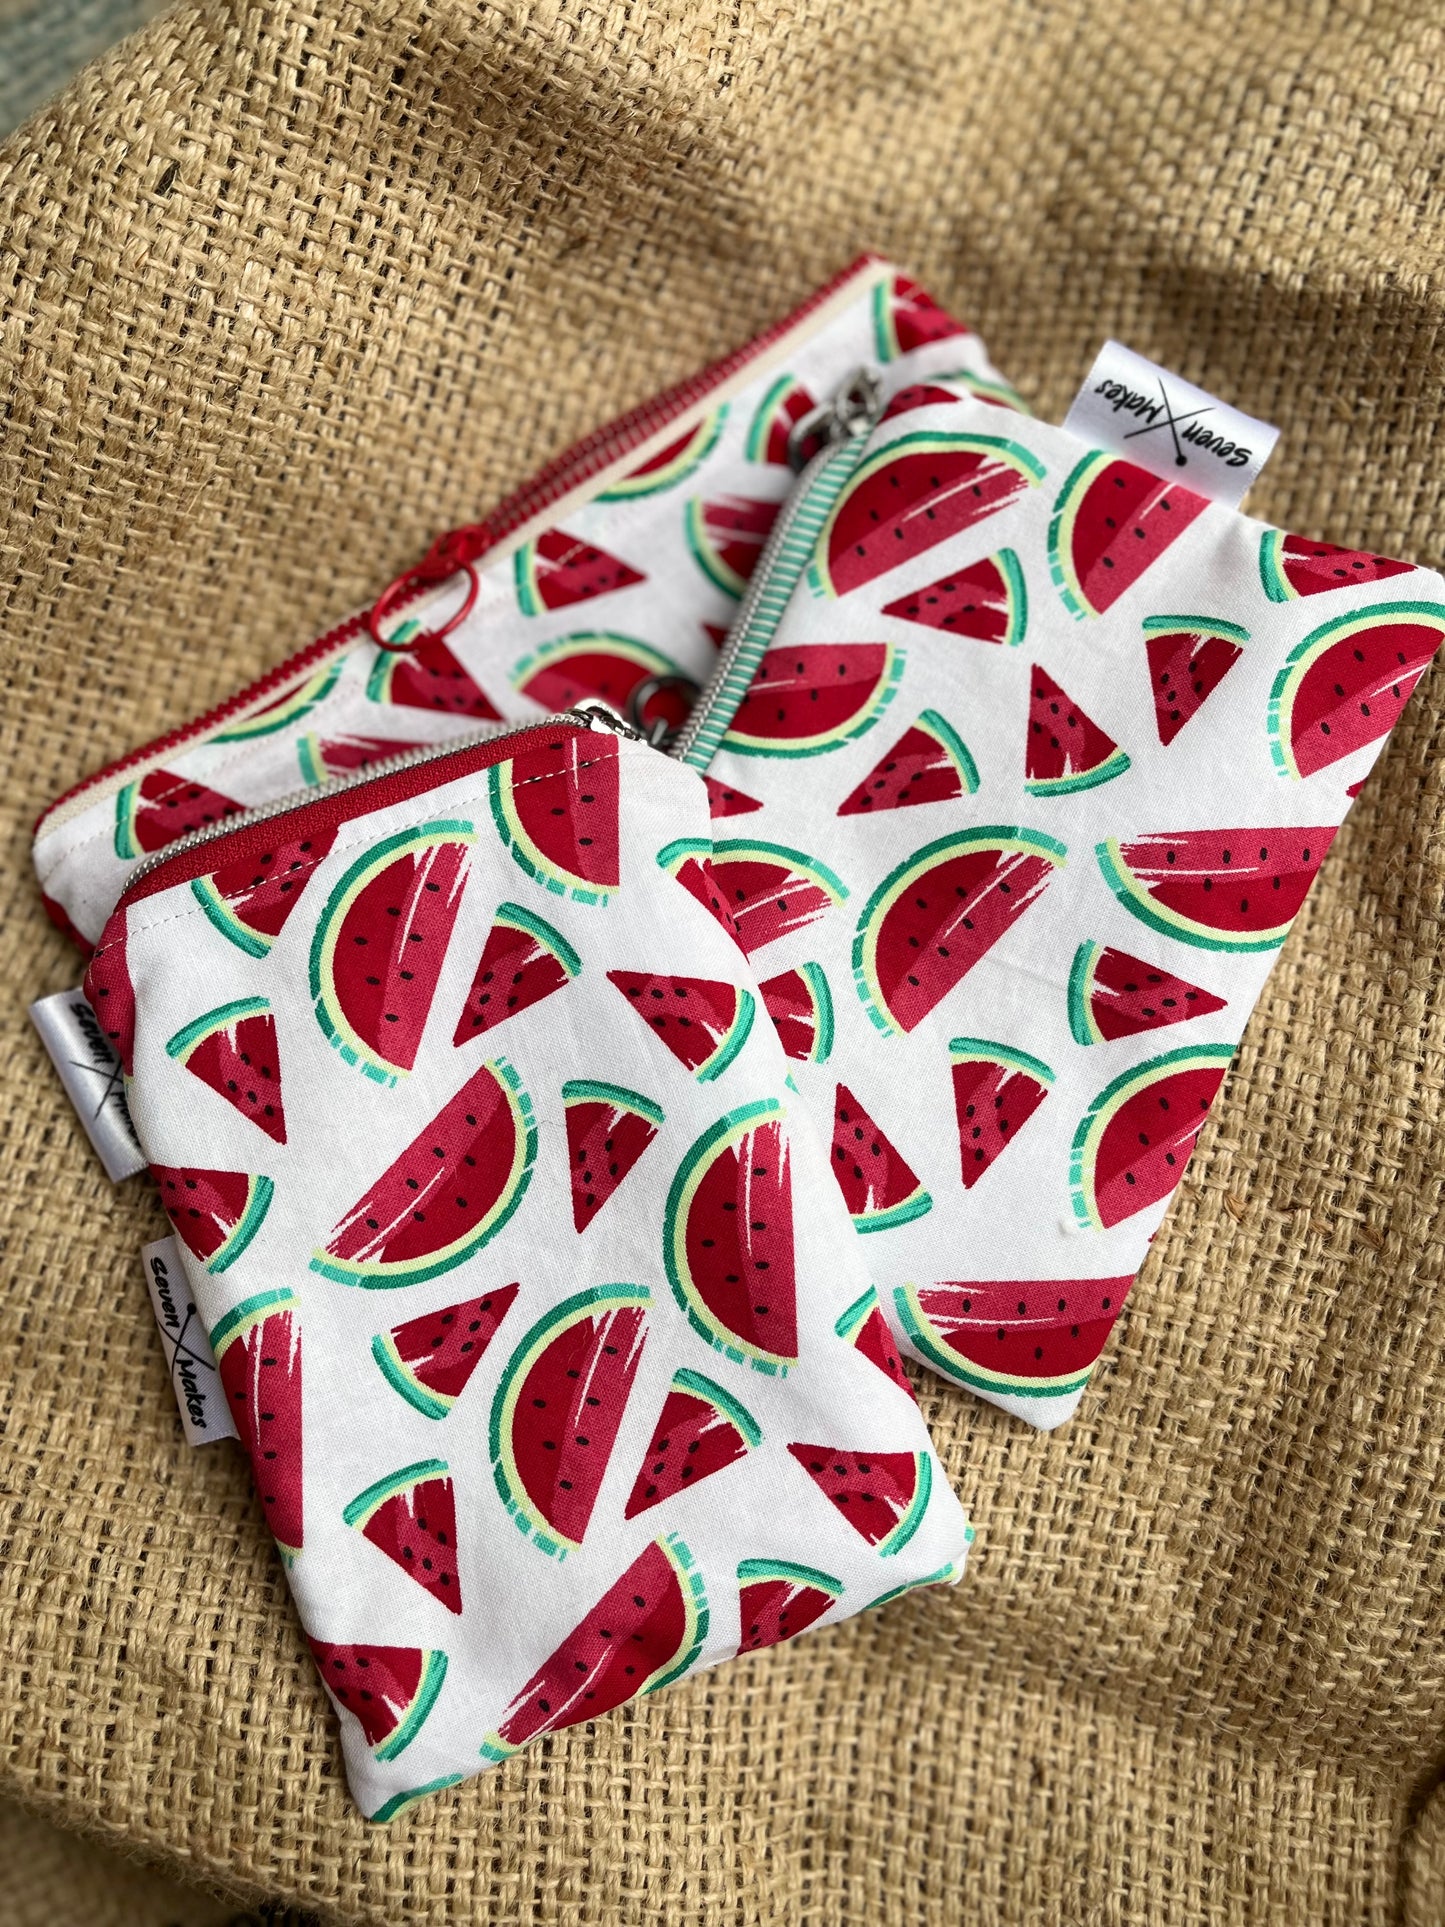 Watermelon zipper bags!